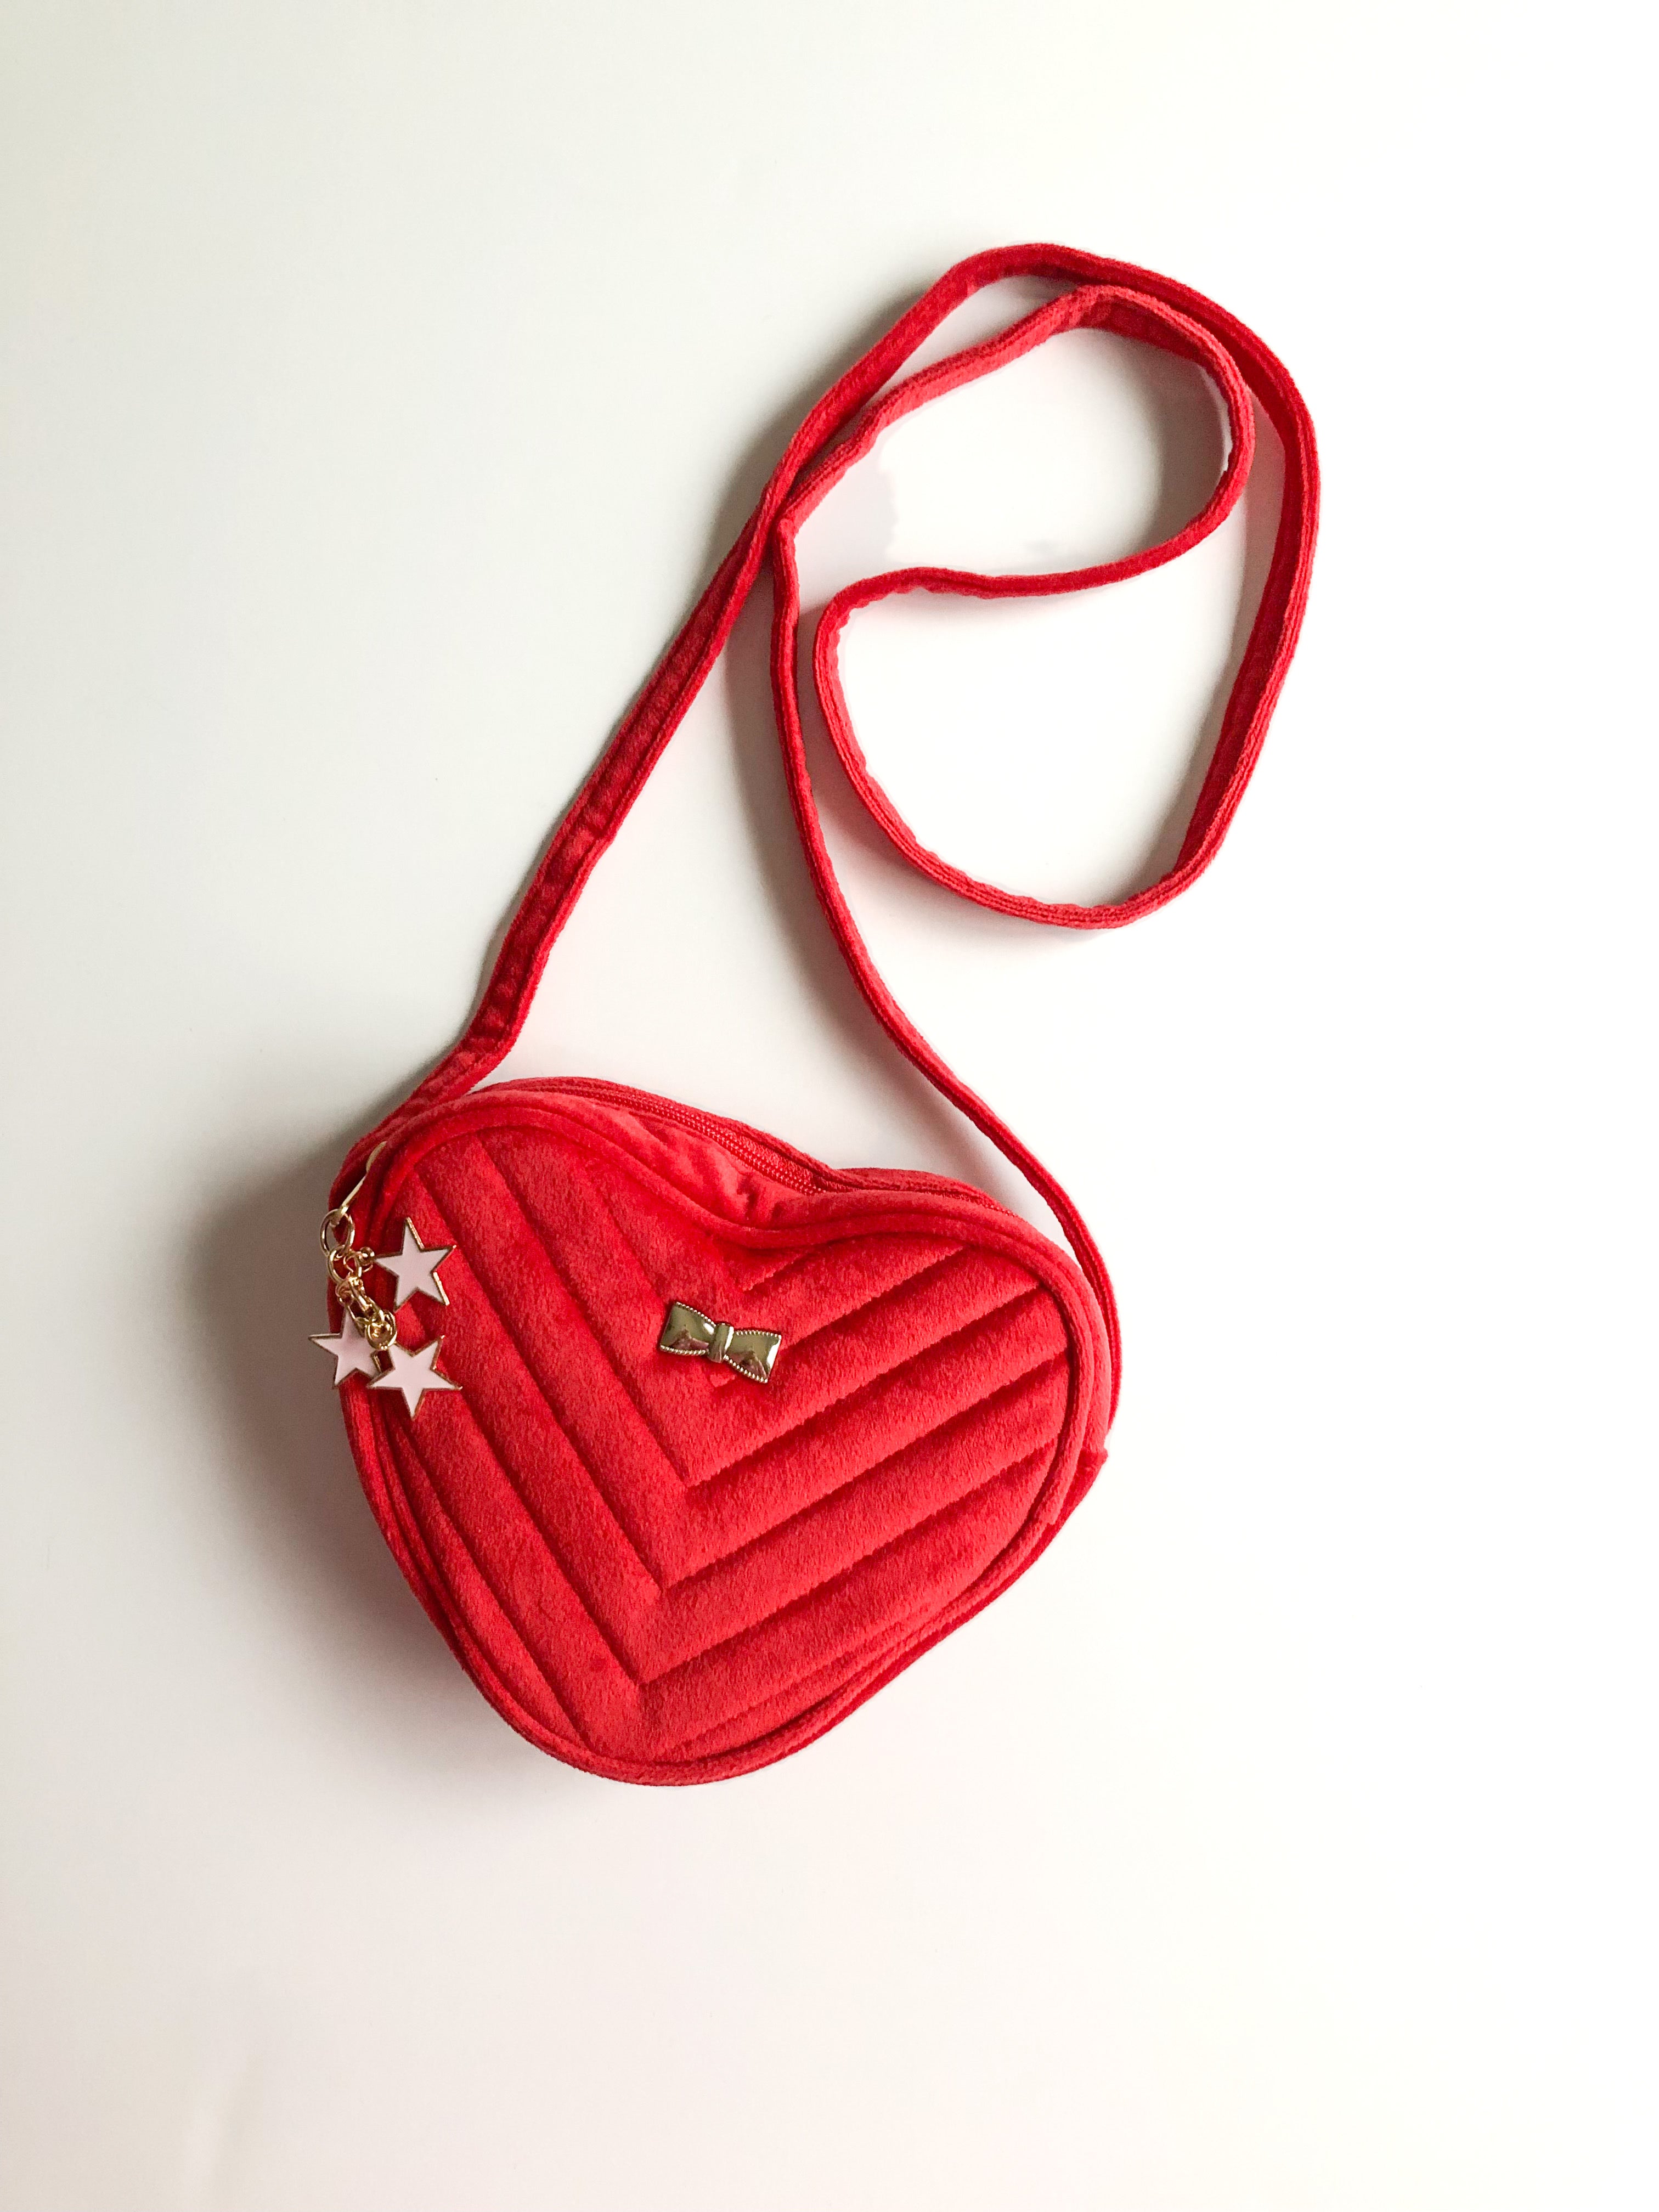 Heart bag | Heart shaped bag, Girls bags, Red handbag